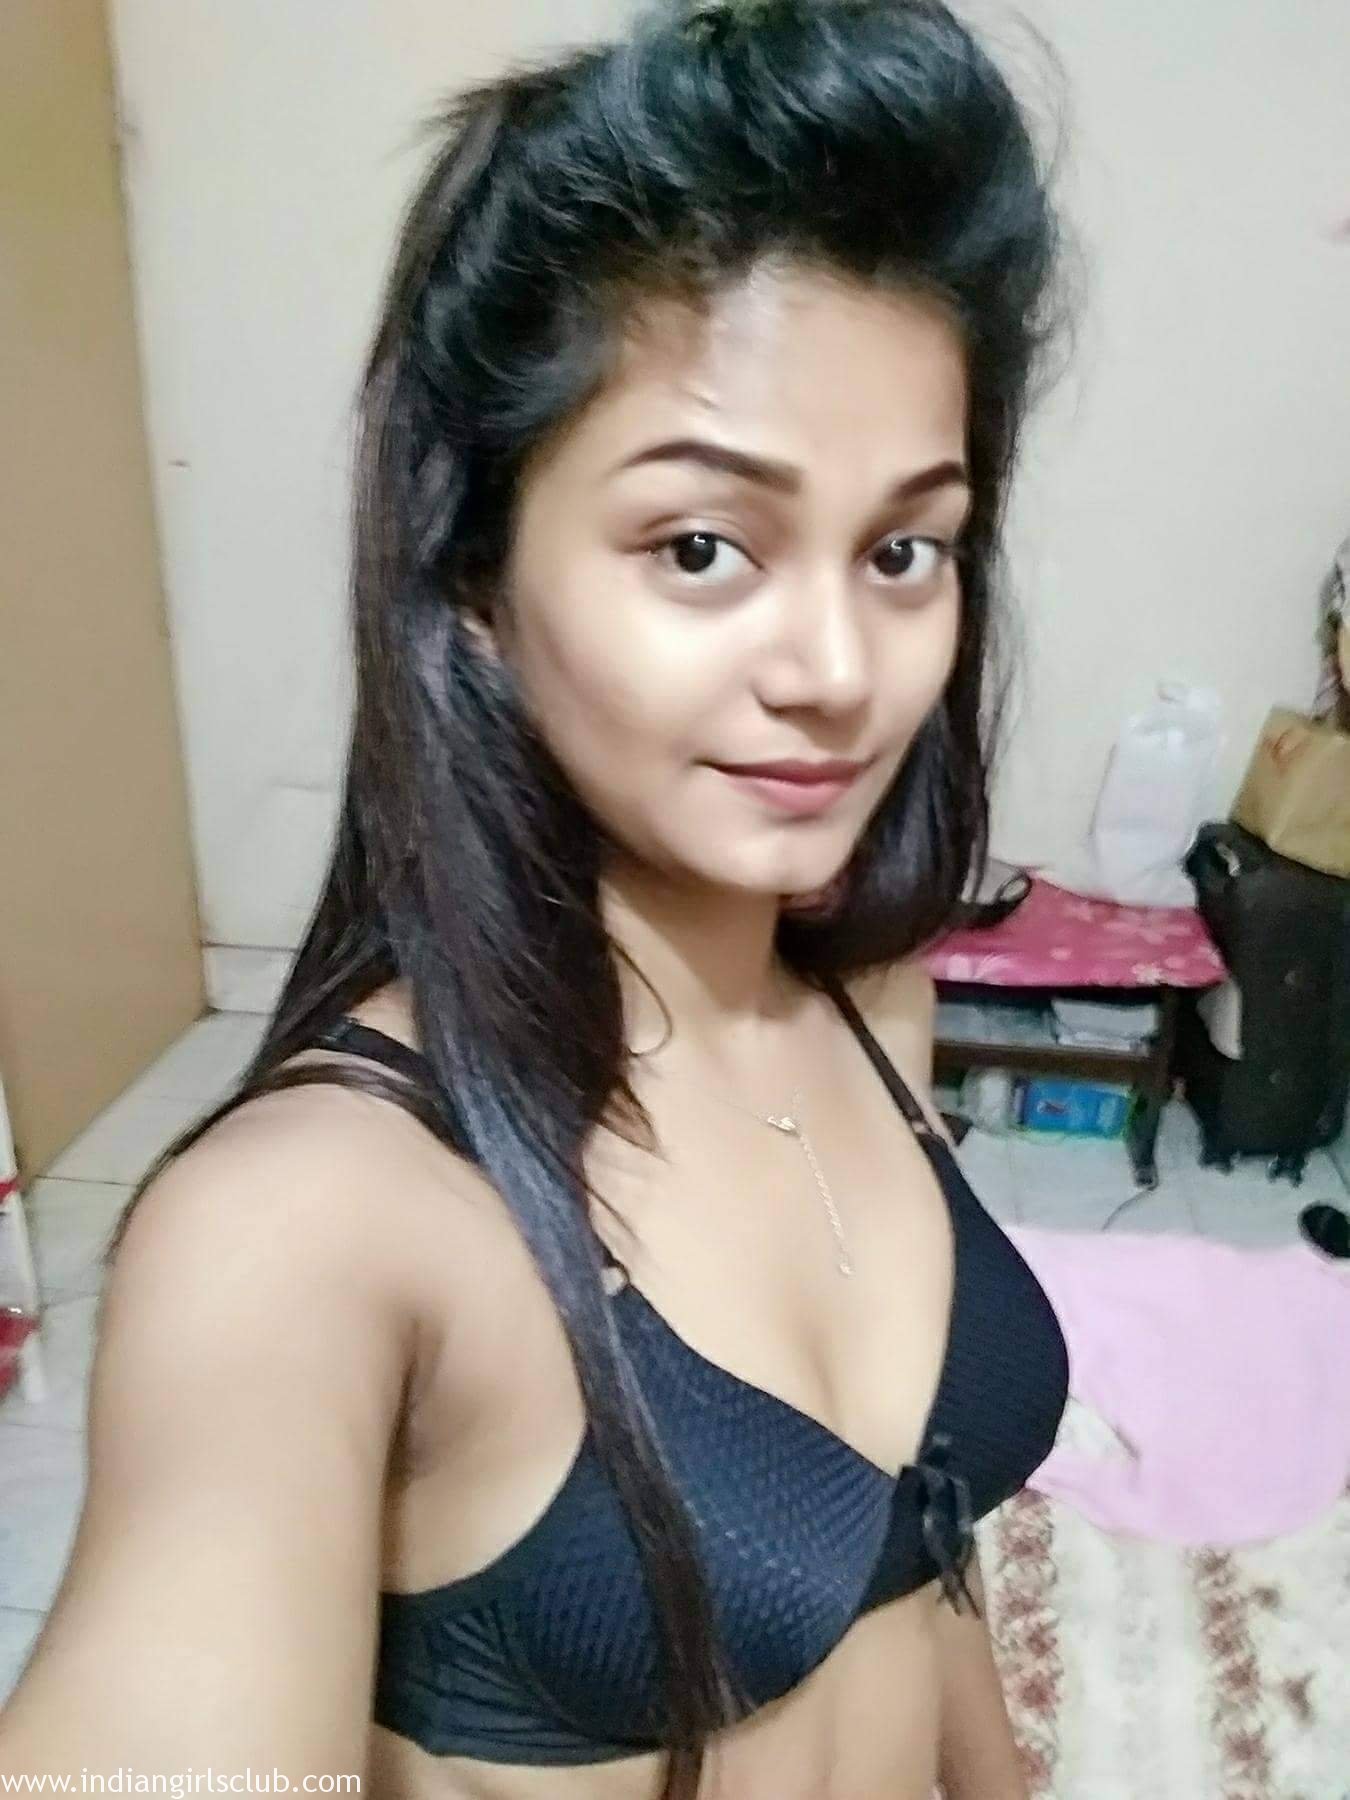 juicy_indian_teen_homemade_porn_7 - Indian Girls Club photo